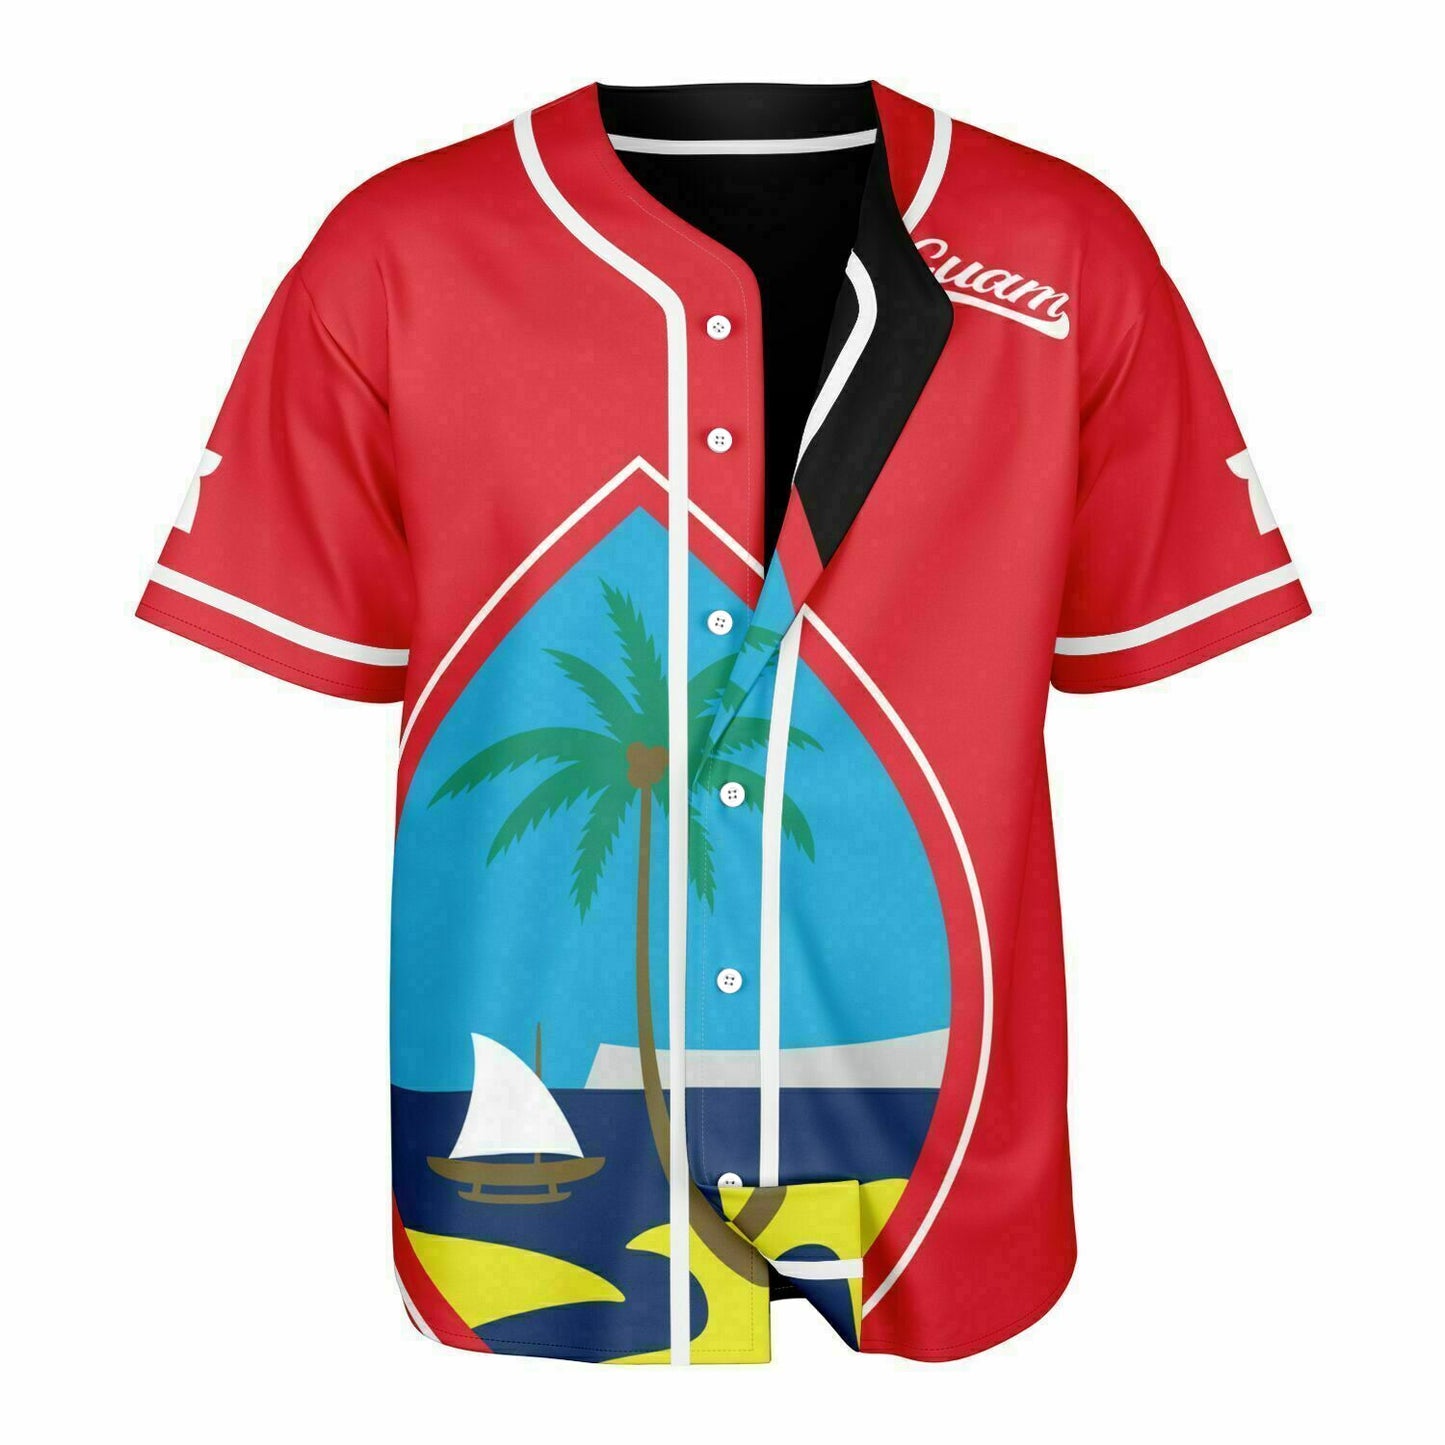 Guam Seal Red Black Reversible Baseball Jersey